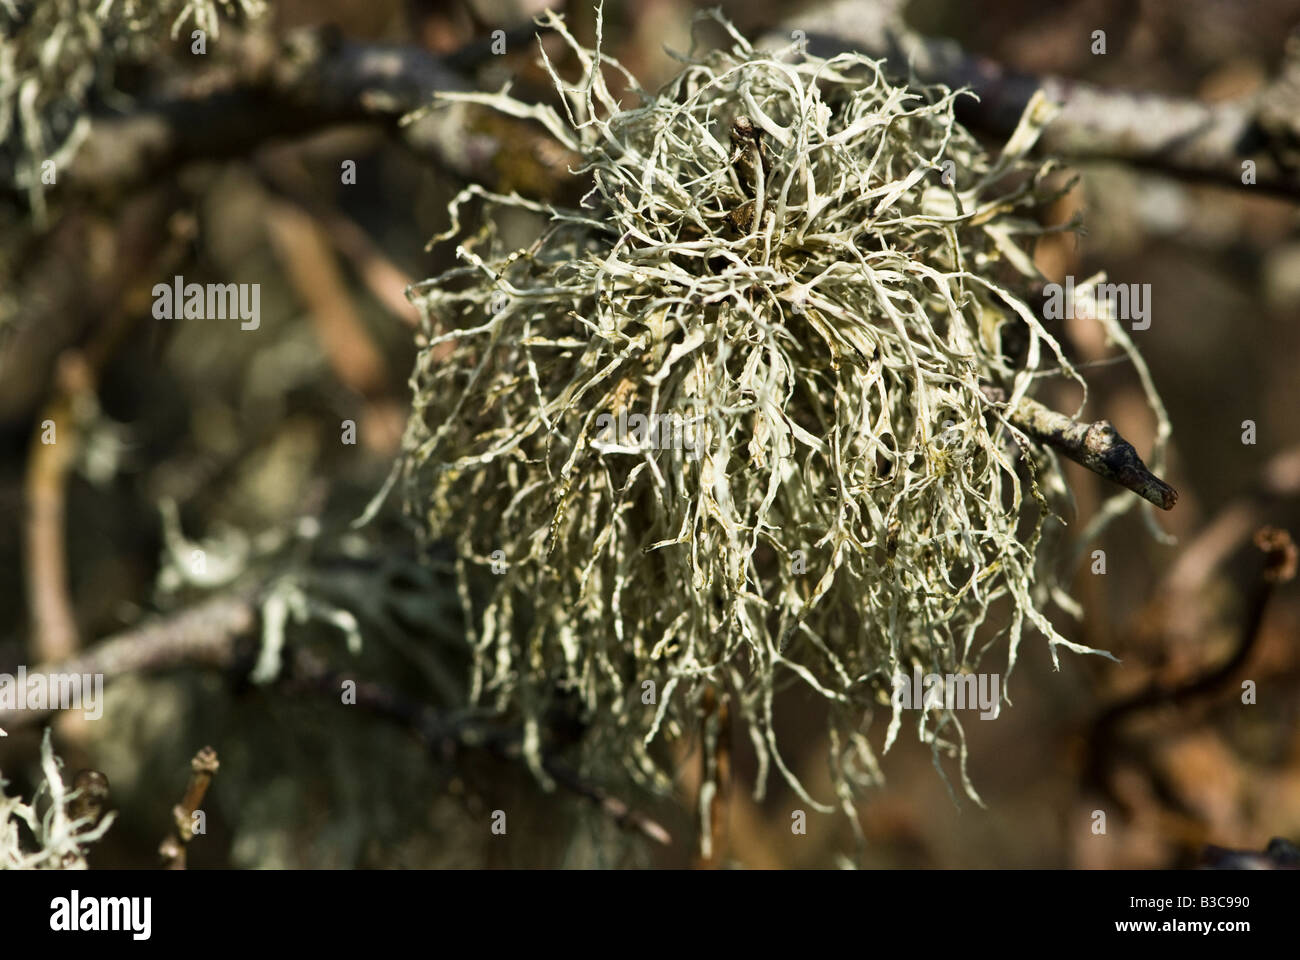 A foliose lichen (Ramalina sp.) growing on a tree branch Stock Photo